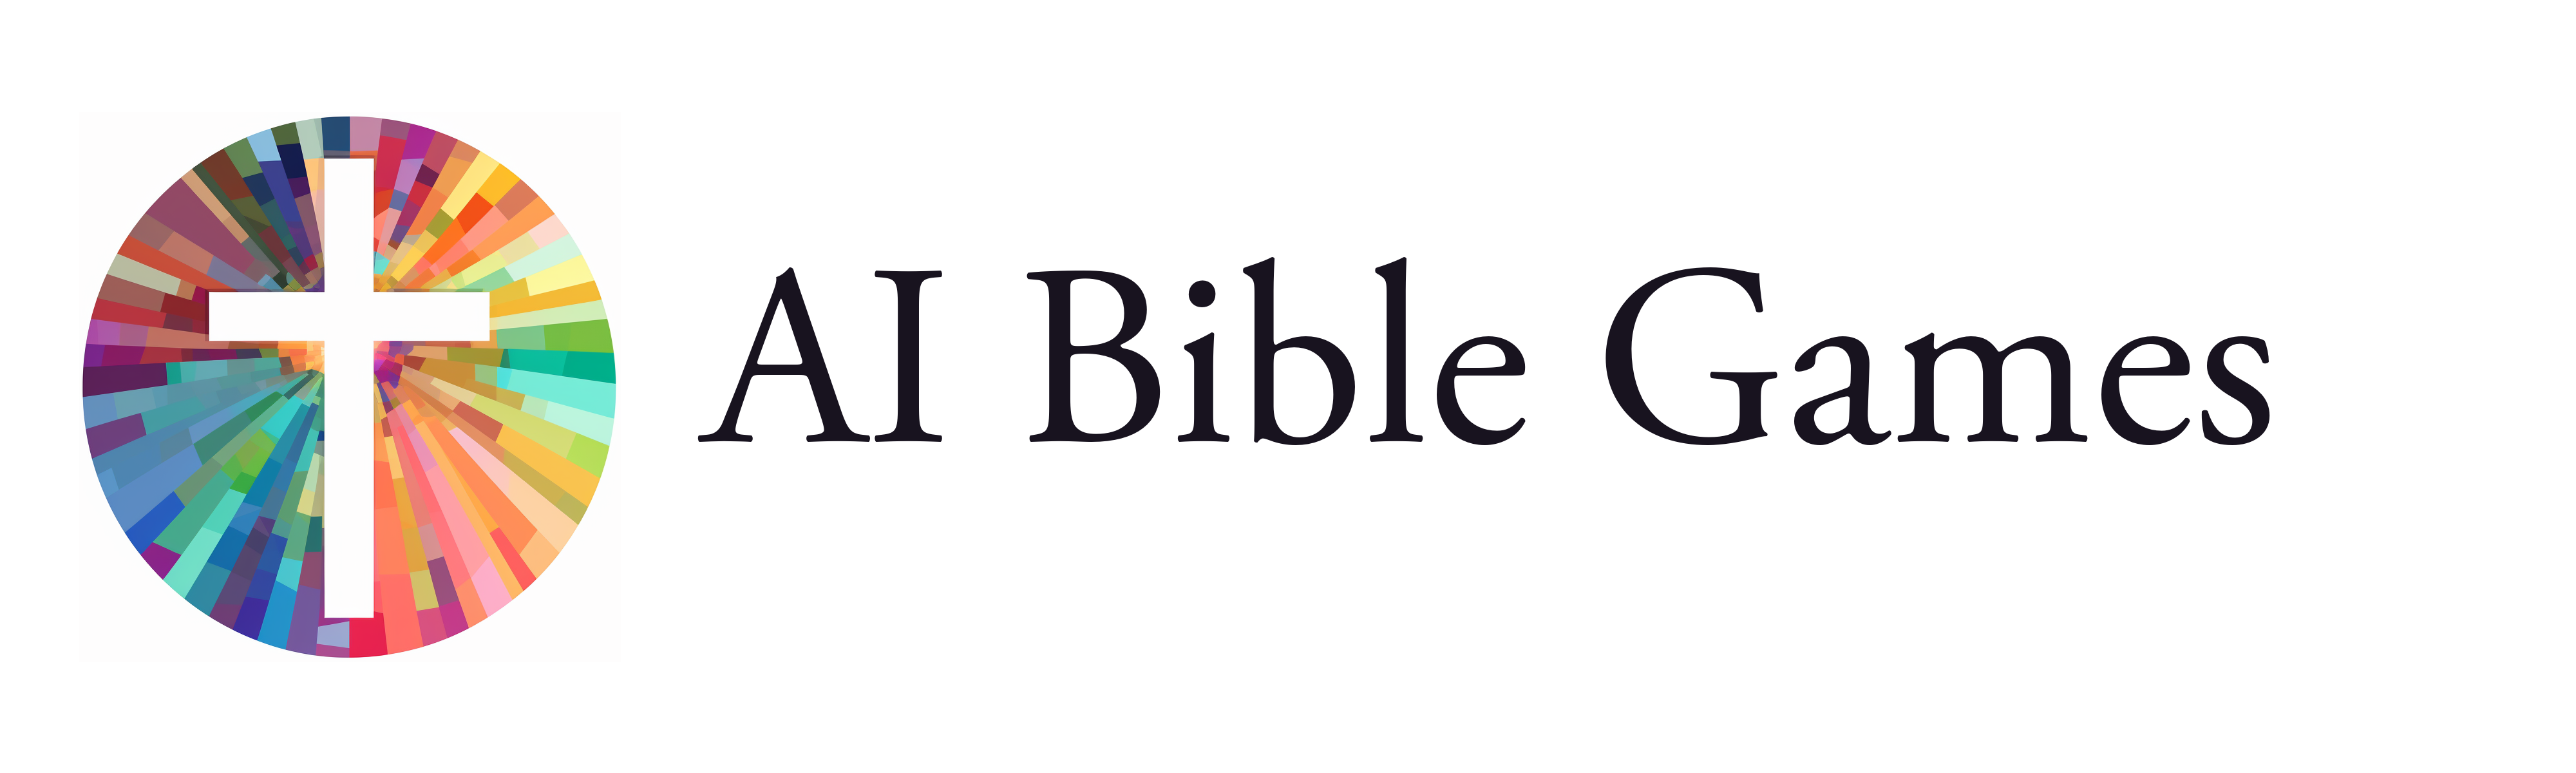 AI Bible Games